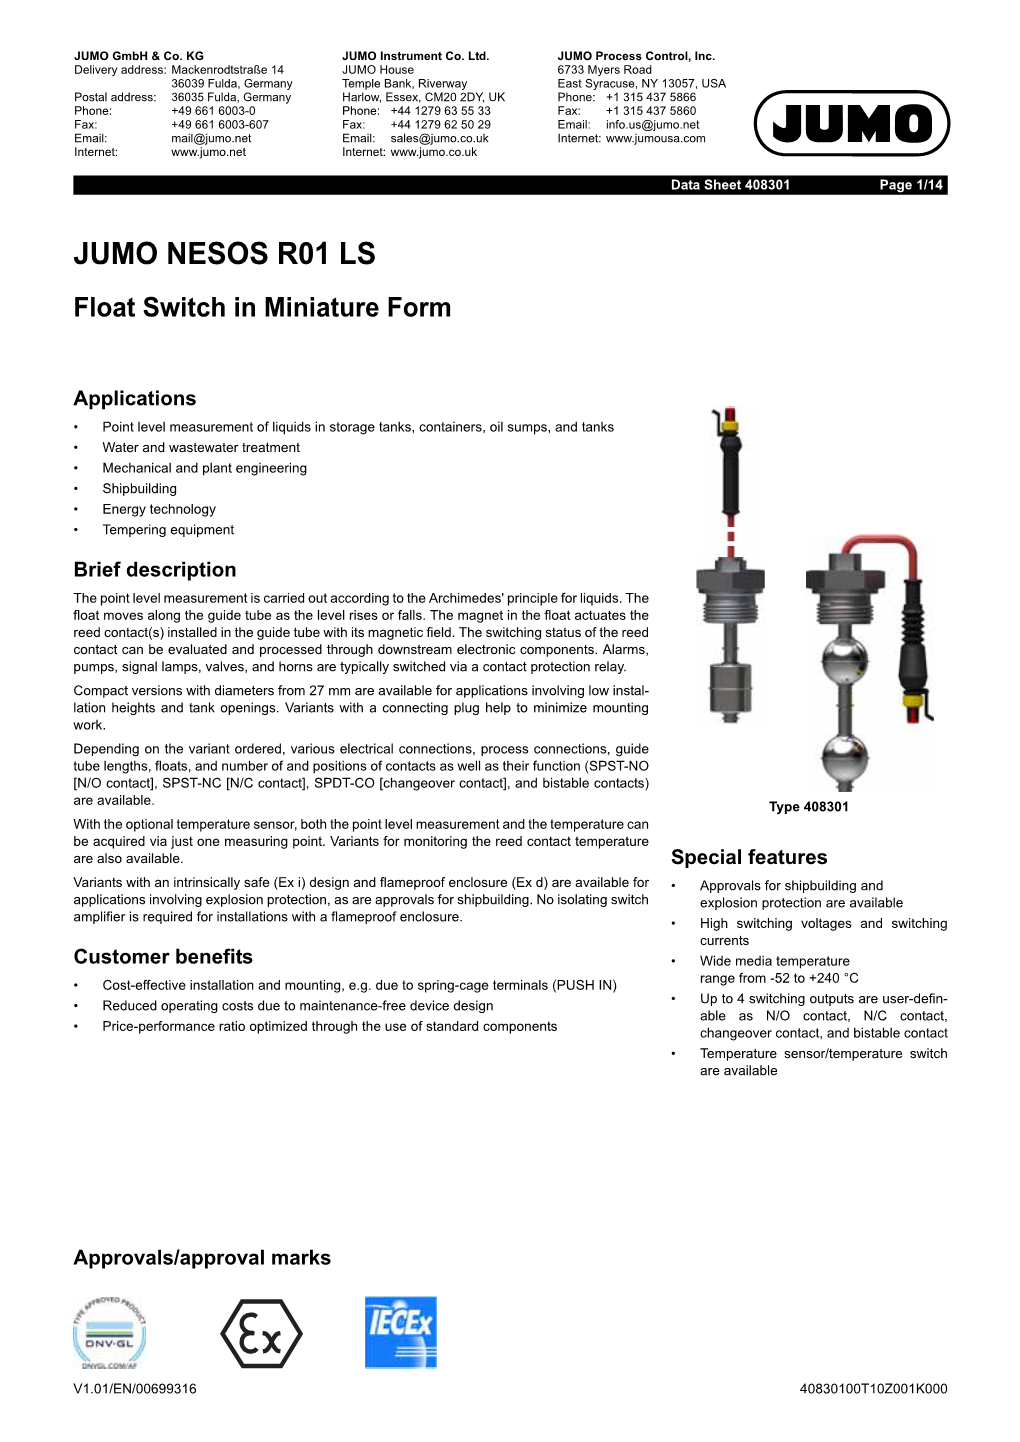 JUMO NESOS R01 LS Float Switch in Miniature Form